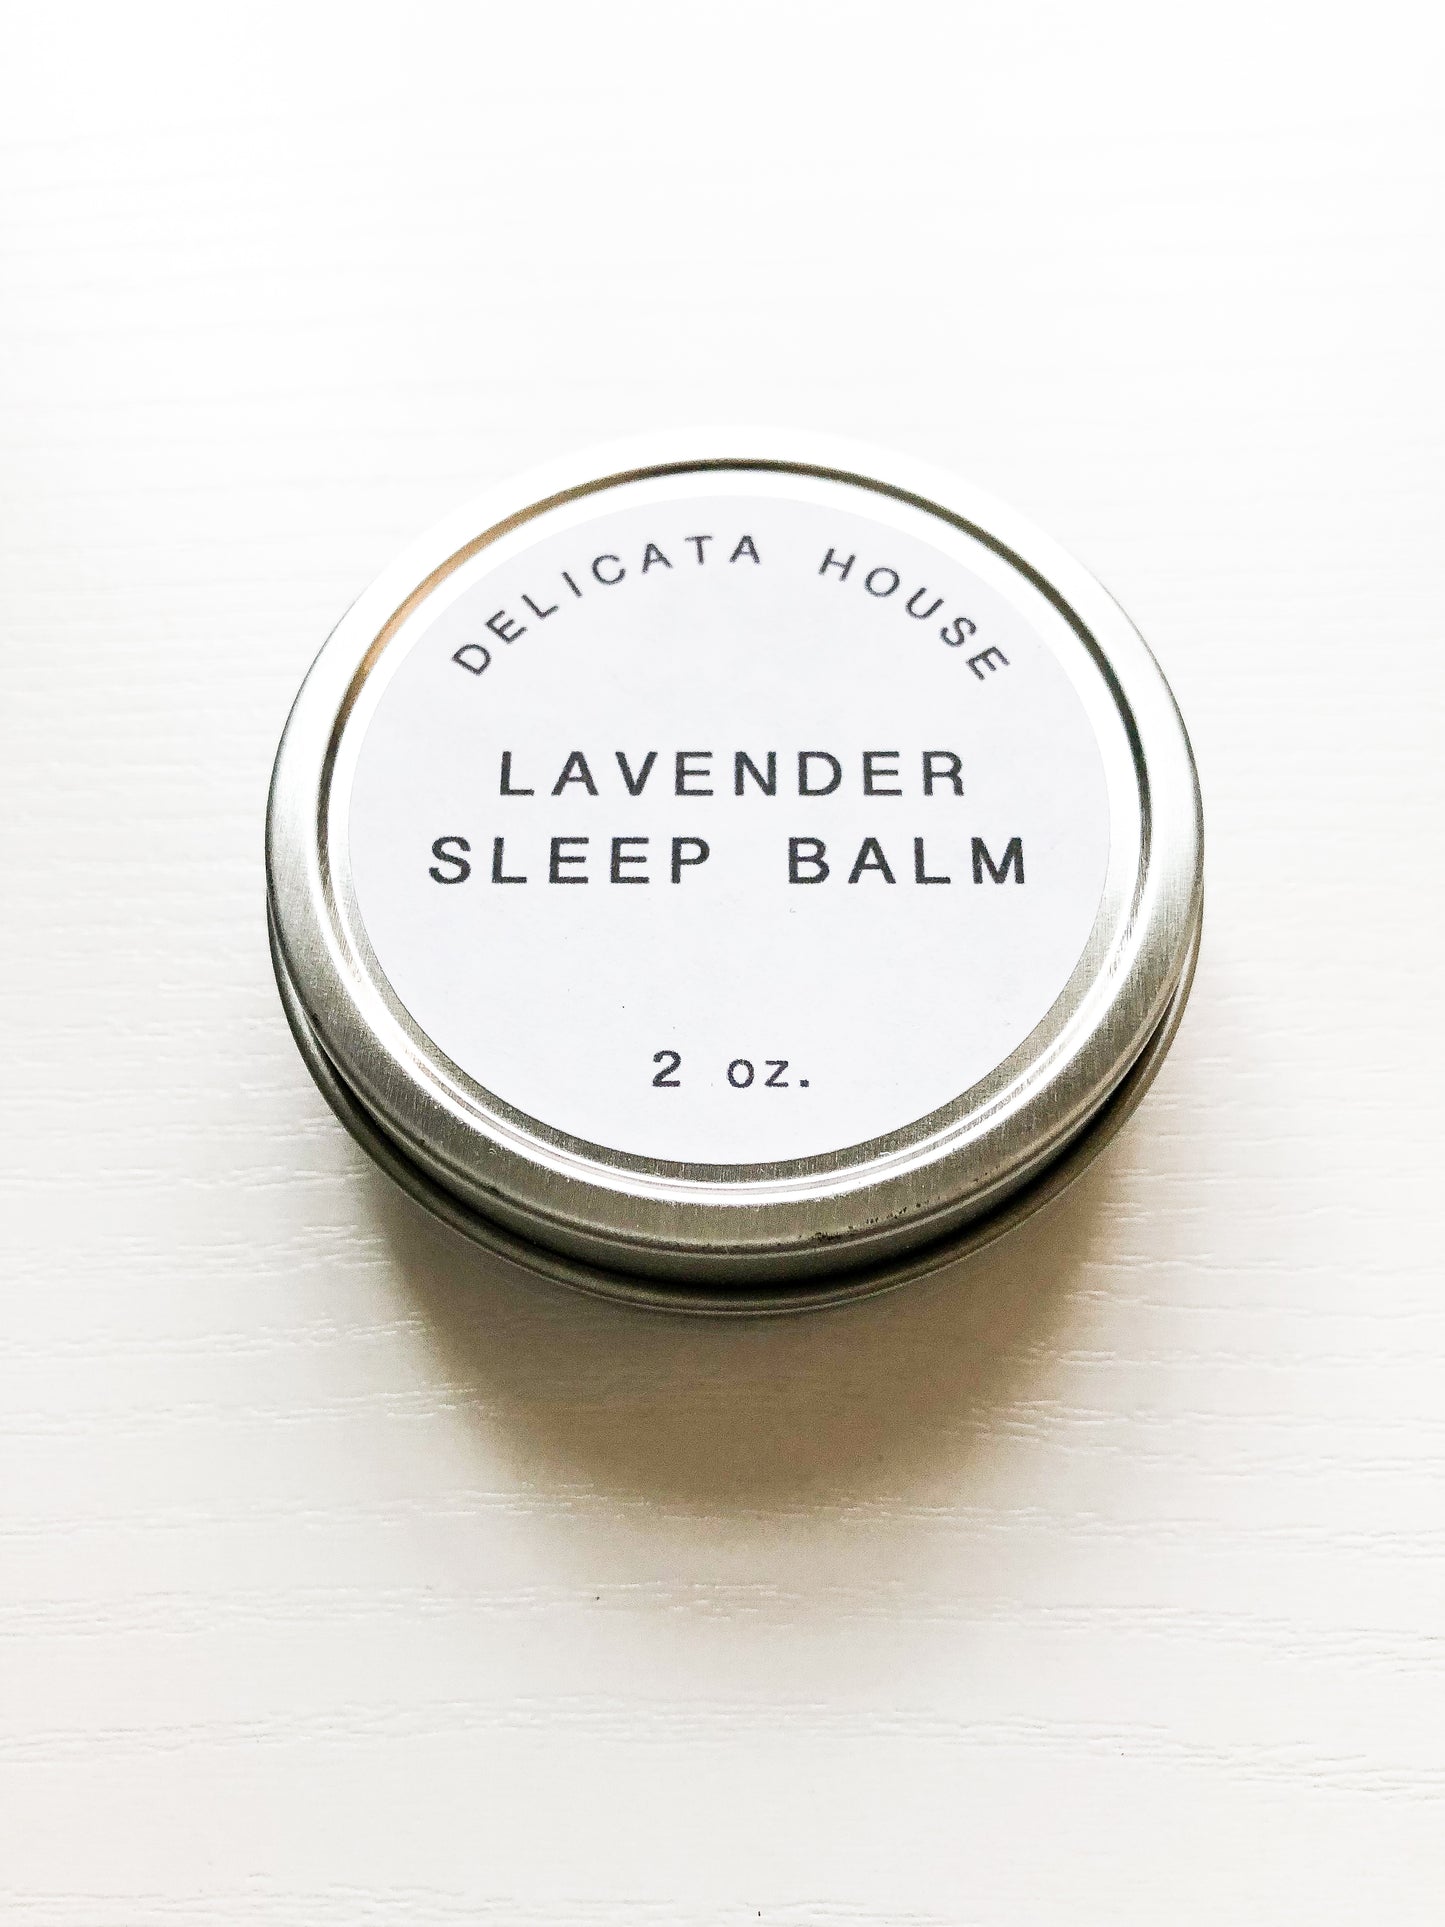 Lavender Aromatherapy Sleep Balm - Lavender Balm for Sleep